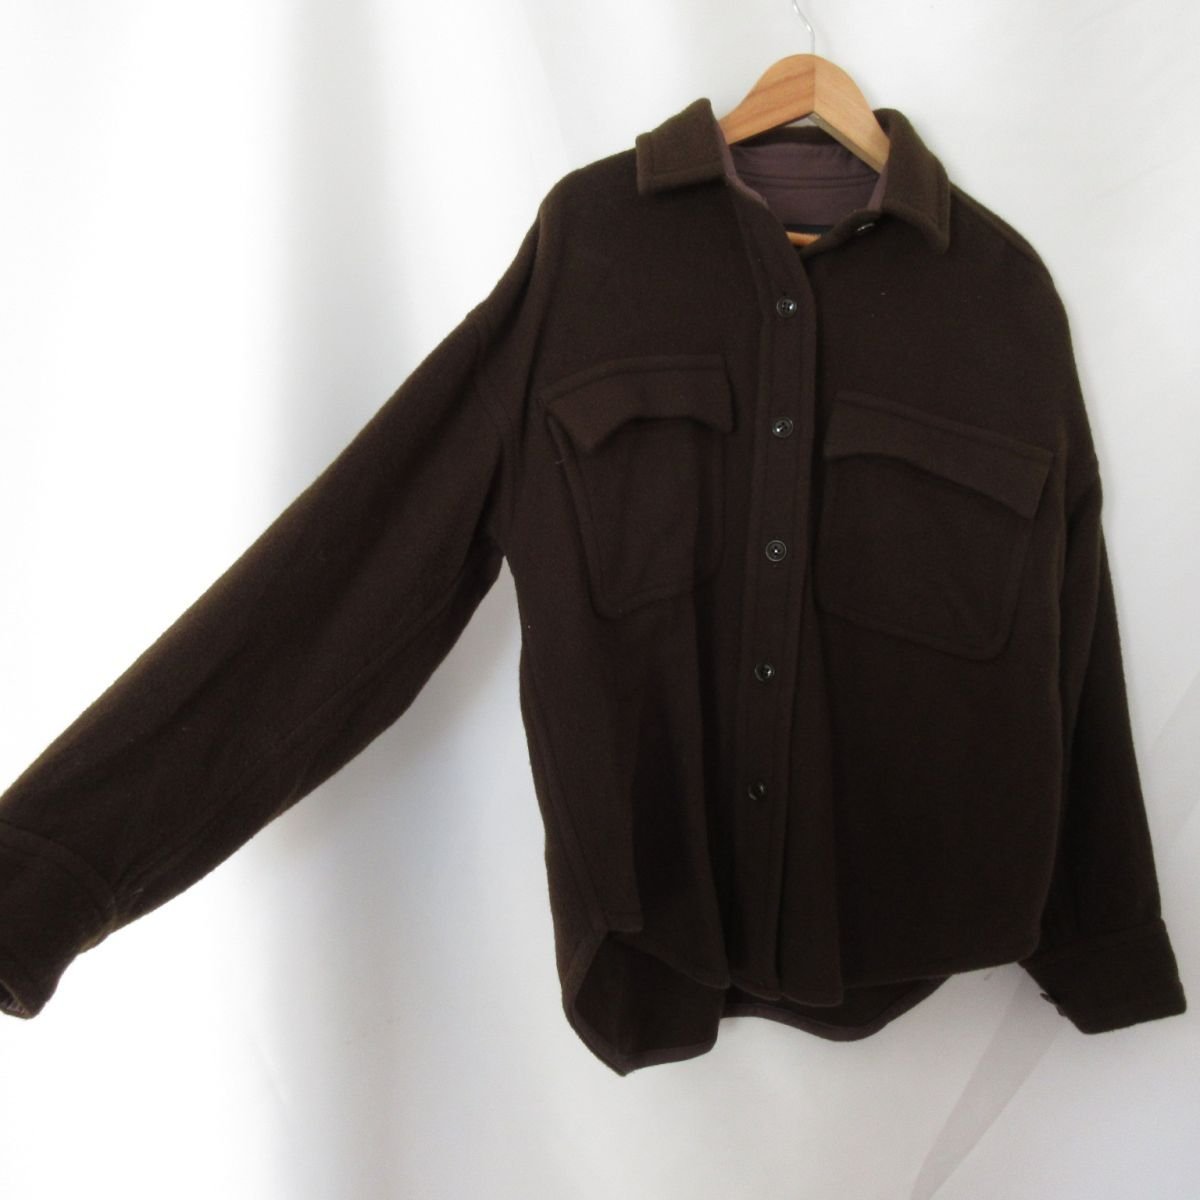  beautiful goods FLORENT Florent LAINE WOOL. pocket long sleeve shirt jacket oversize 1 Brown 104